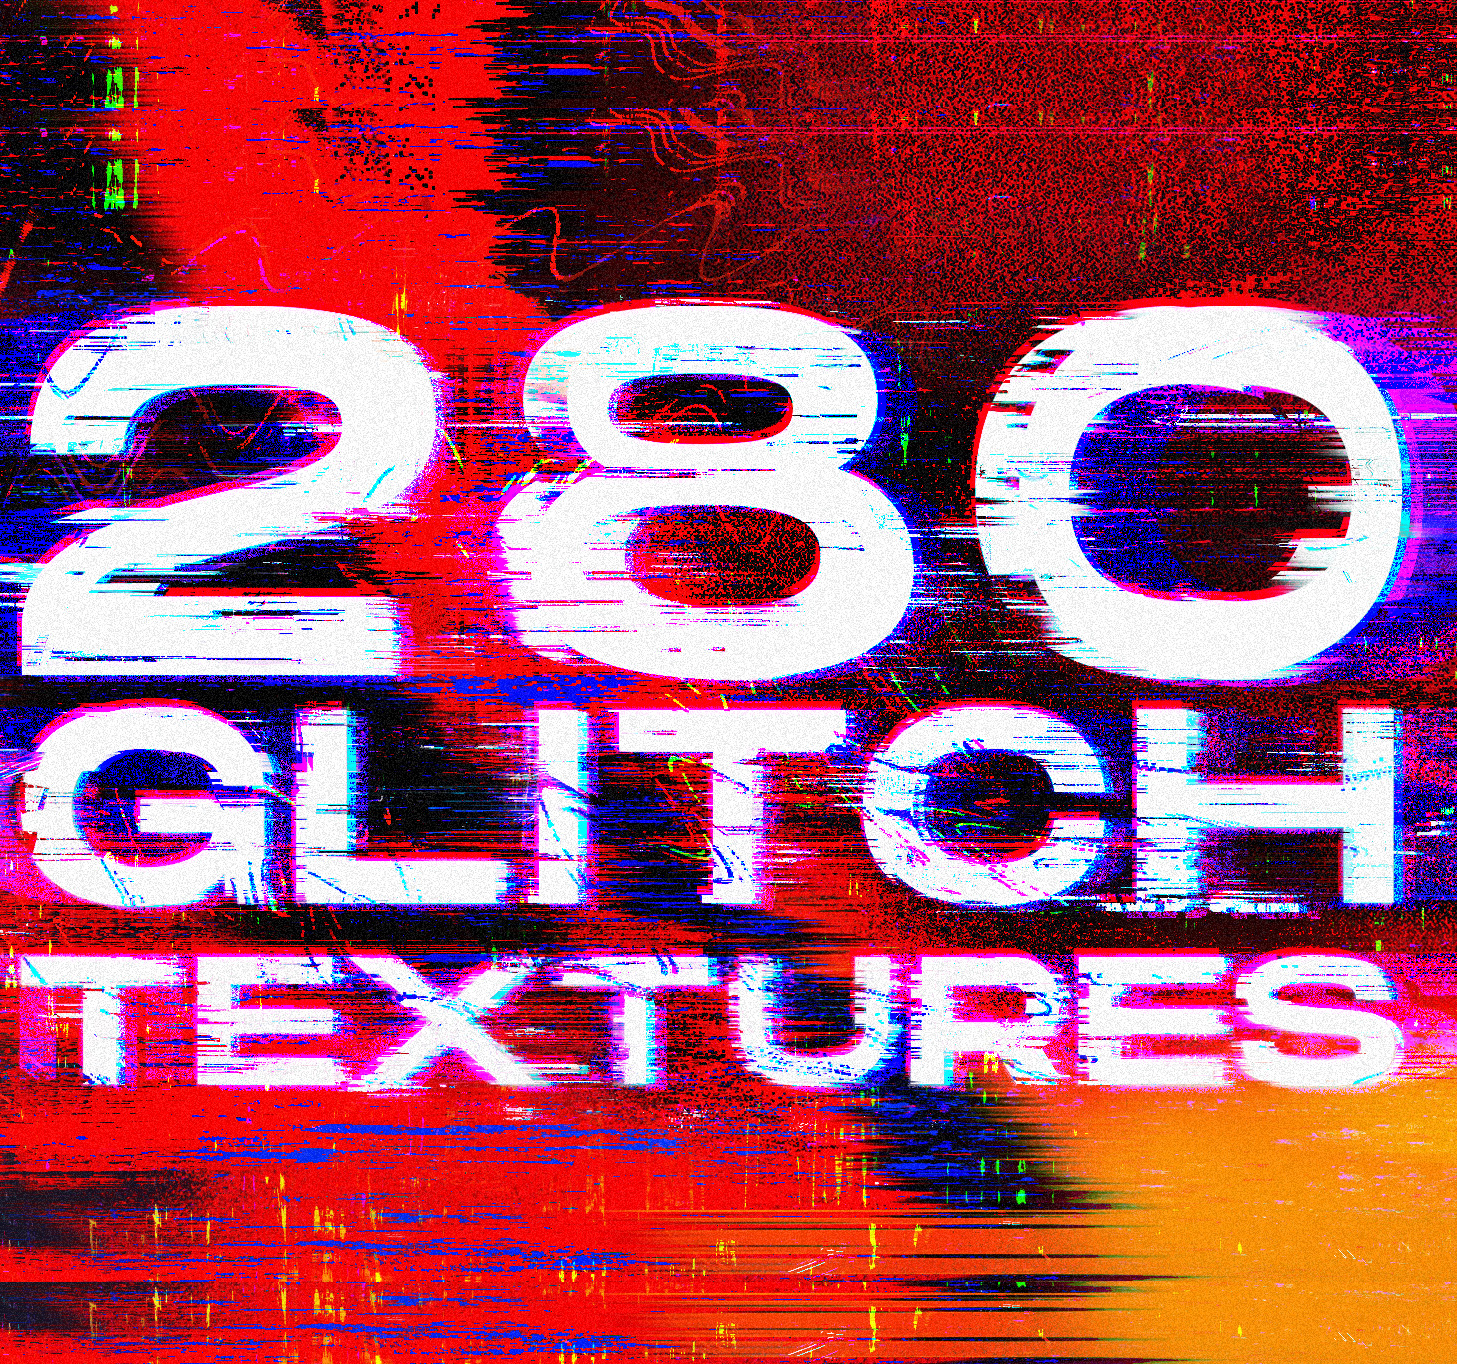 280 glitch distortion effect texture bundle cover image.